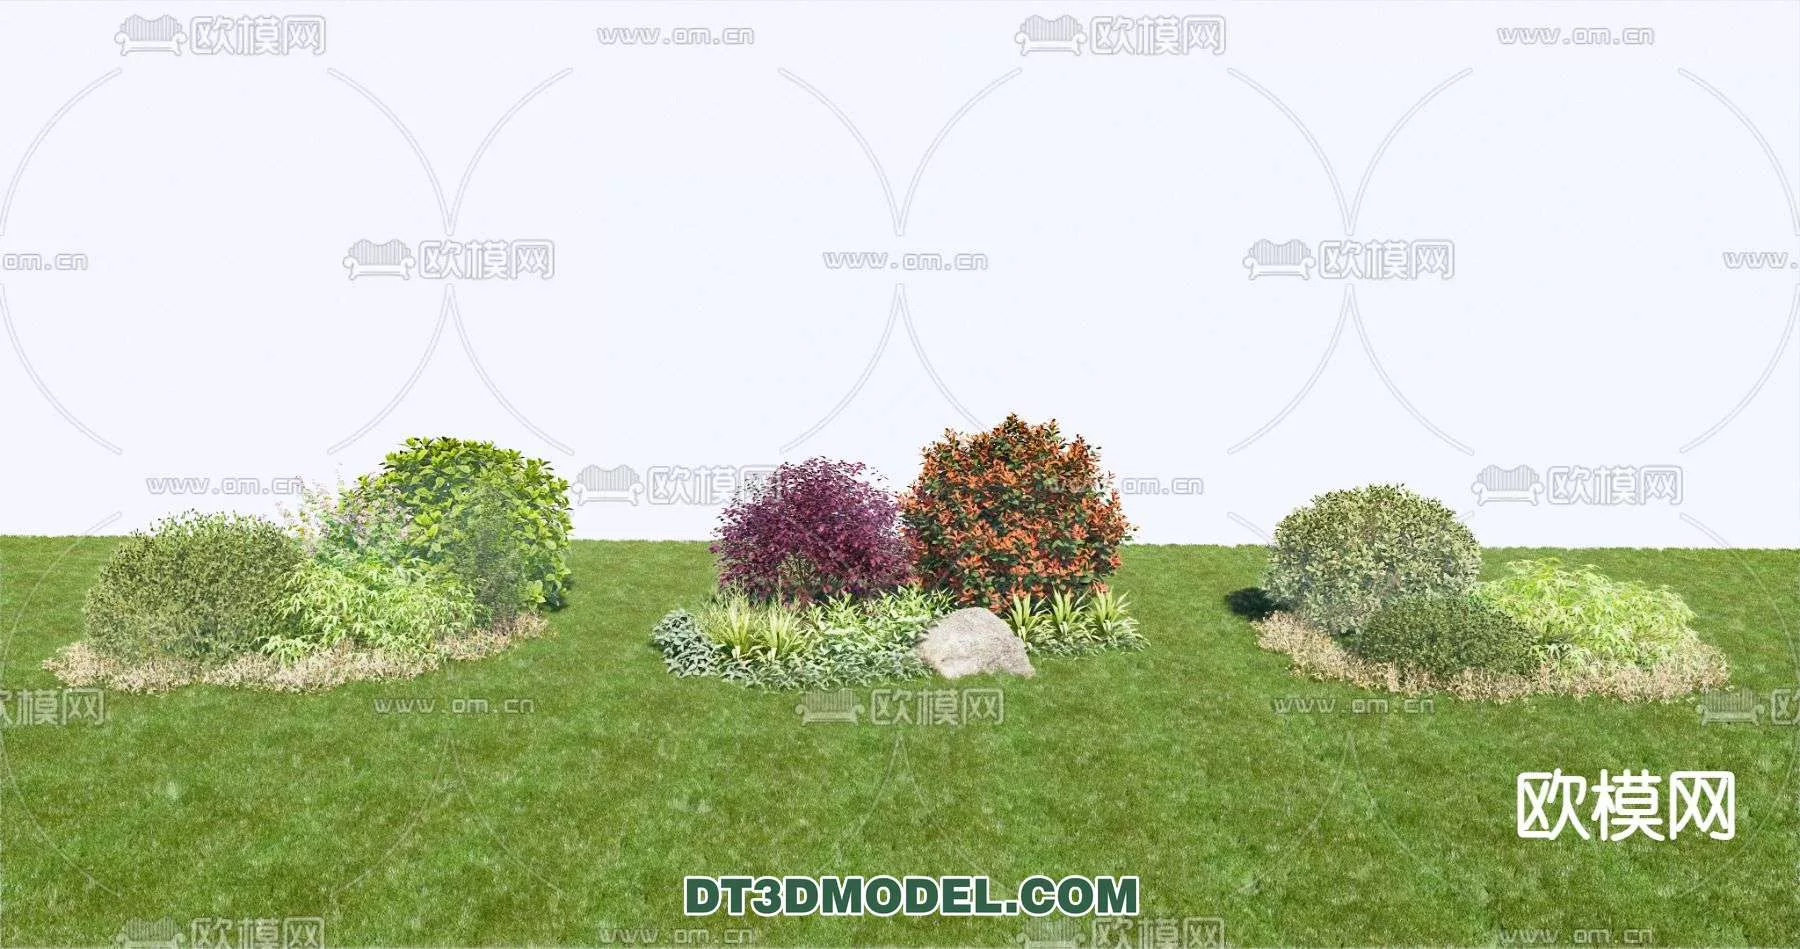 MODERN UNDERSHRUB - SKETCHUP 3D MODEL - VRAY OR ENSCAPE - ID15733